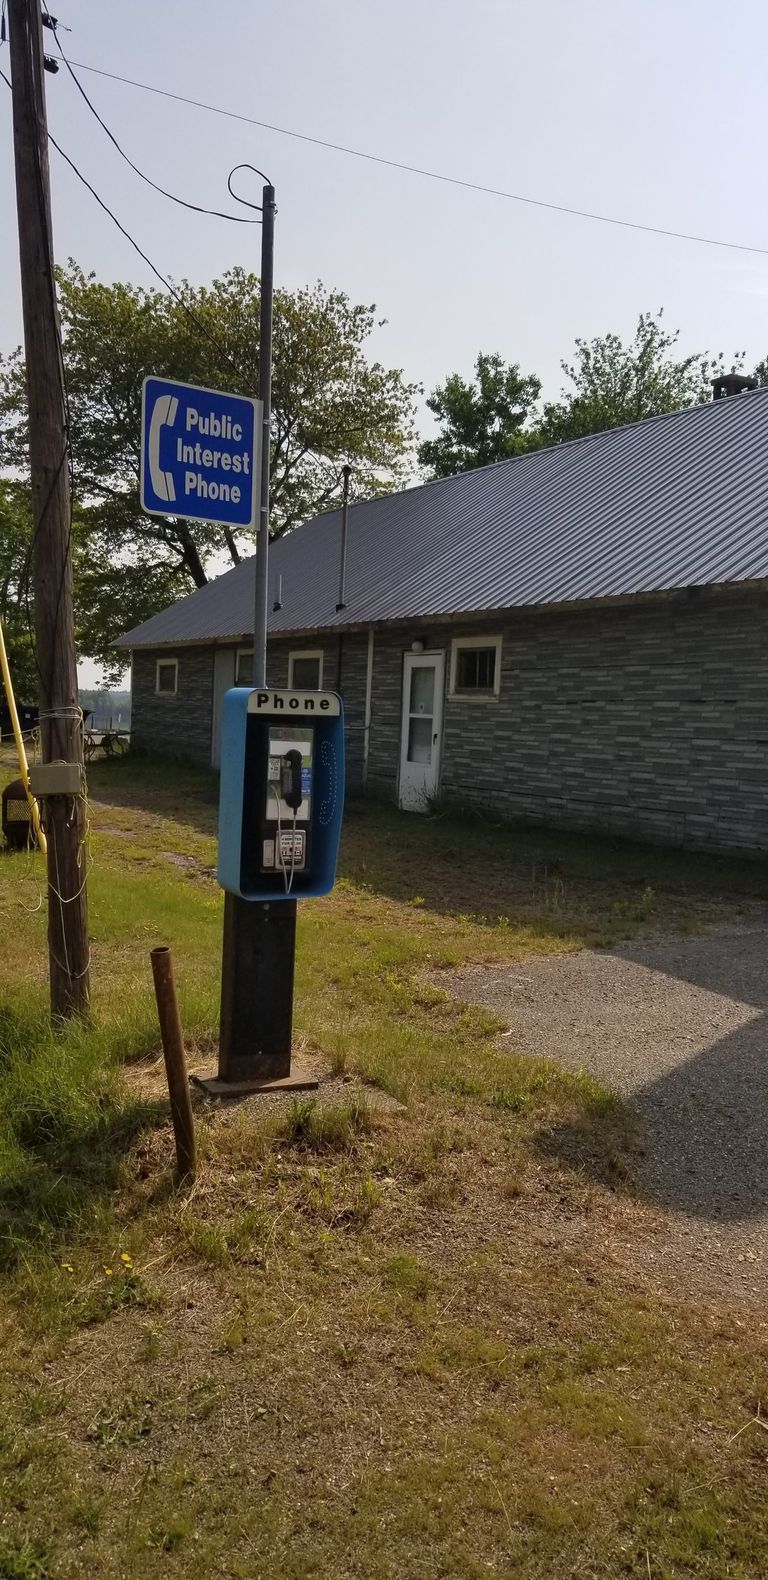          Public Interest Telephone at Meddybemps, Maine
   